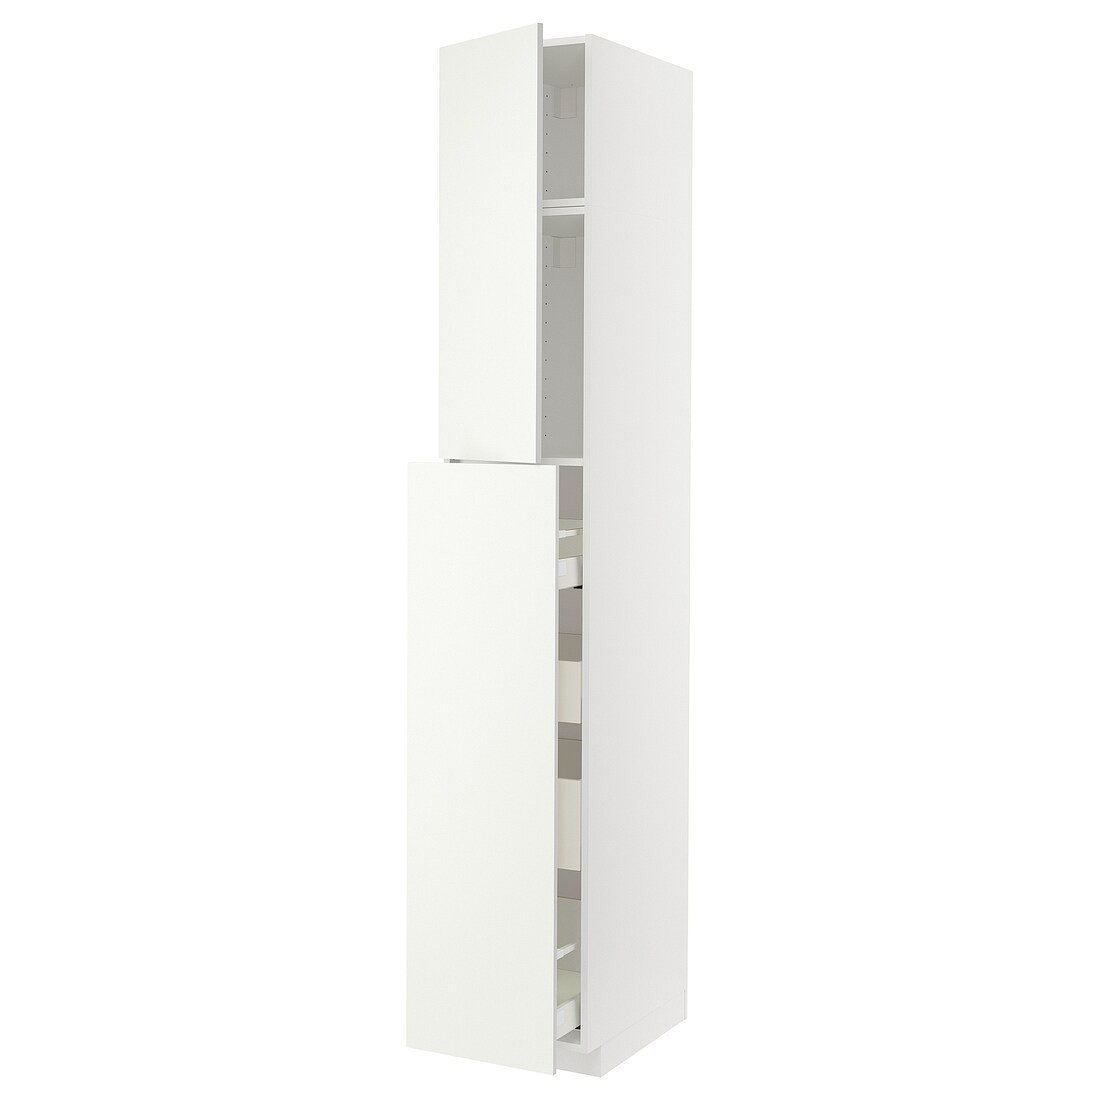 IKEA METOD МЕТОД / MAXIMERA МАКСИМЕРА Высокий шкаф полки / ящики, белый / Vallstena белый 59507417 | 595.074.17